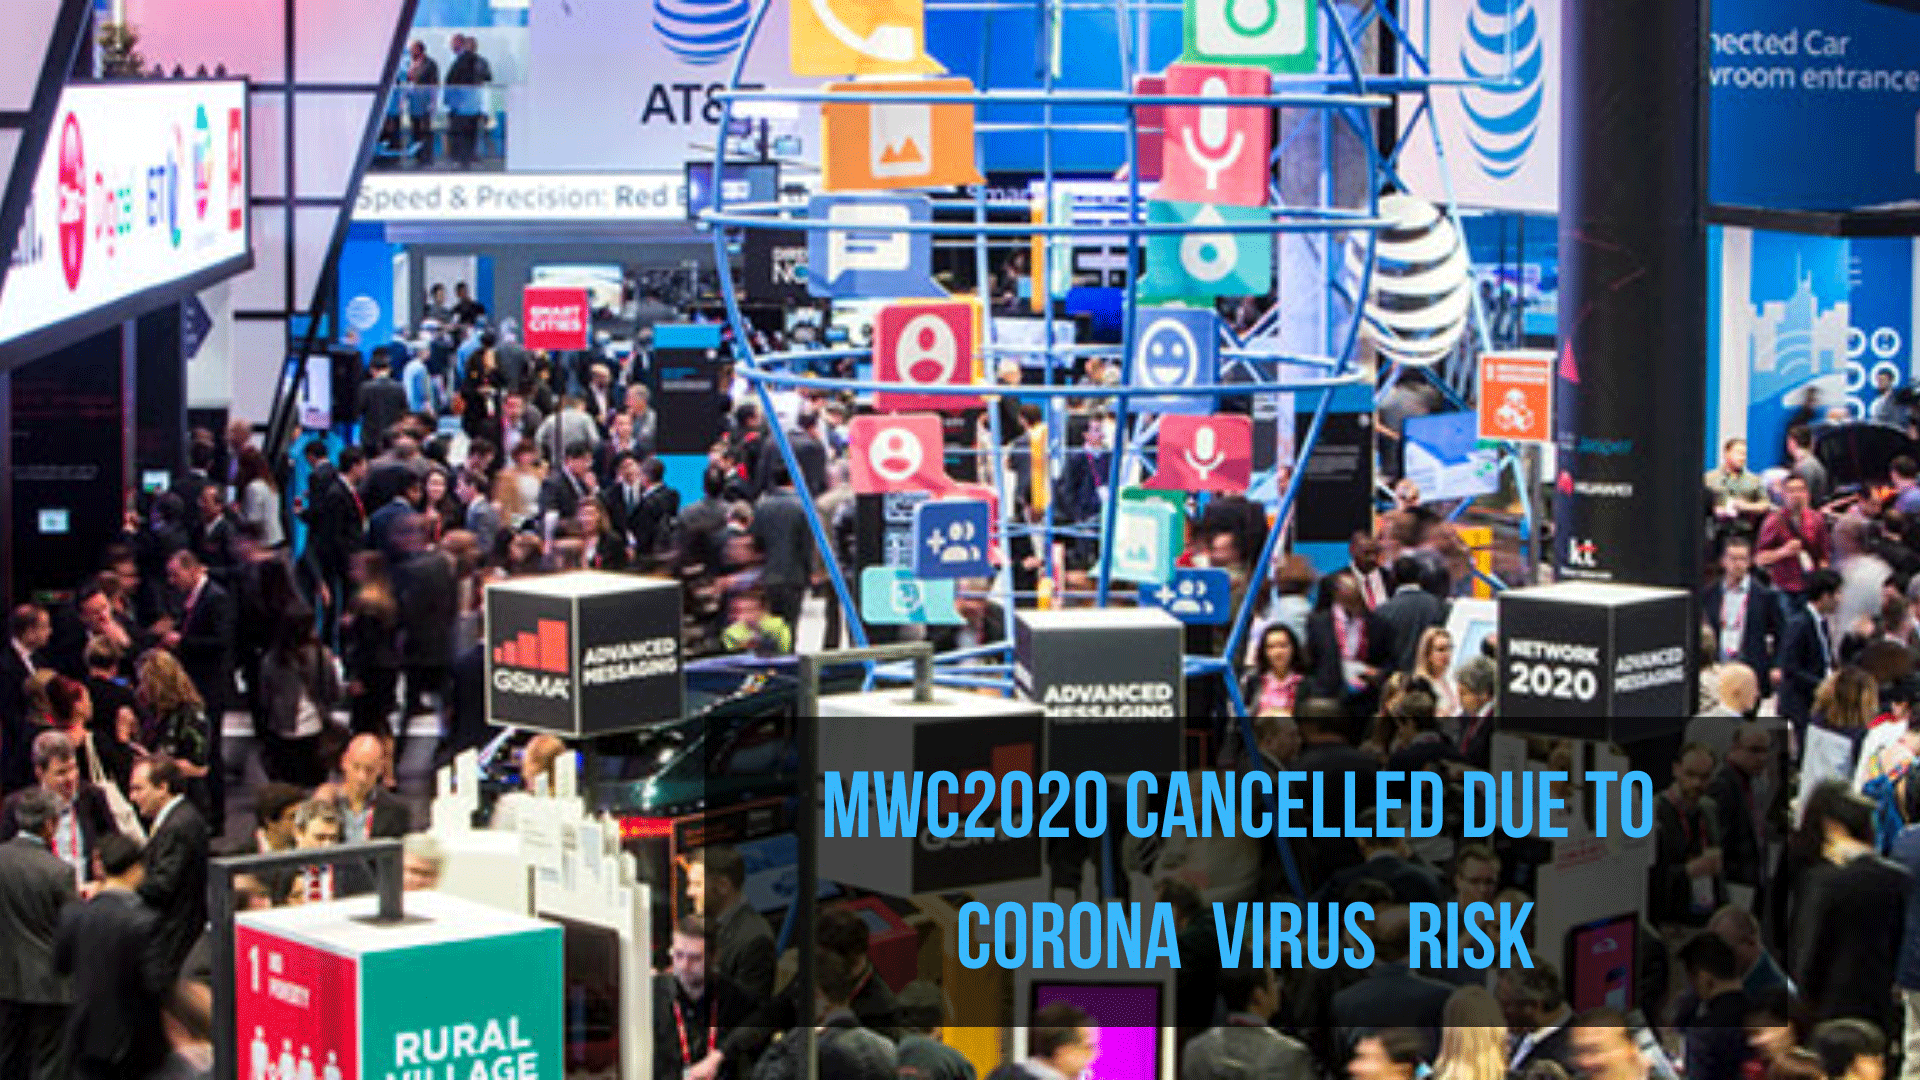 GSMA Cancels Mobile World Congress 2020 amidst Covid-19 Corona Virus concerns